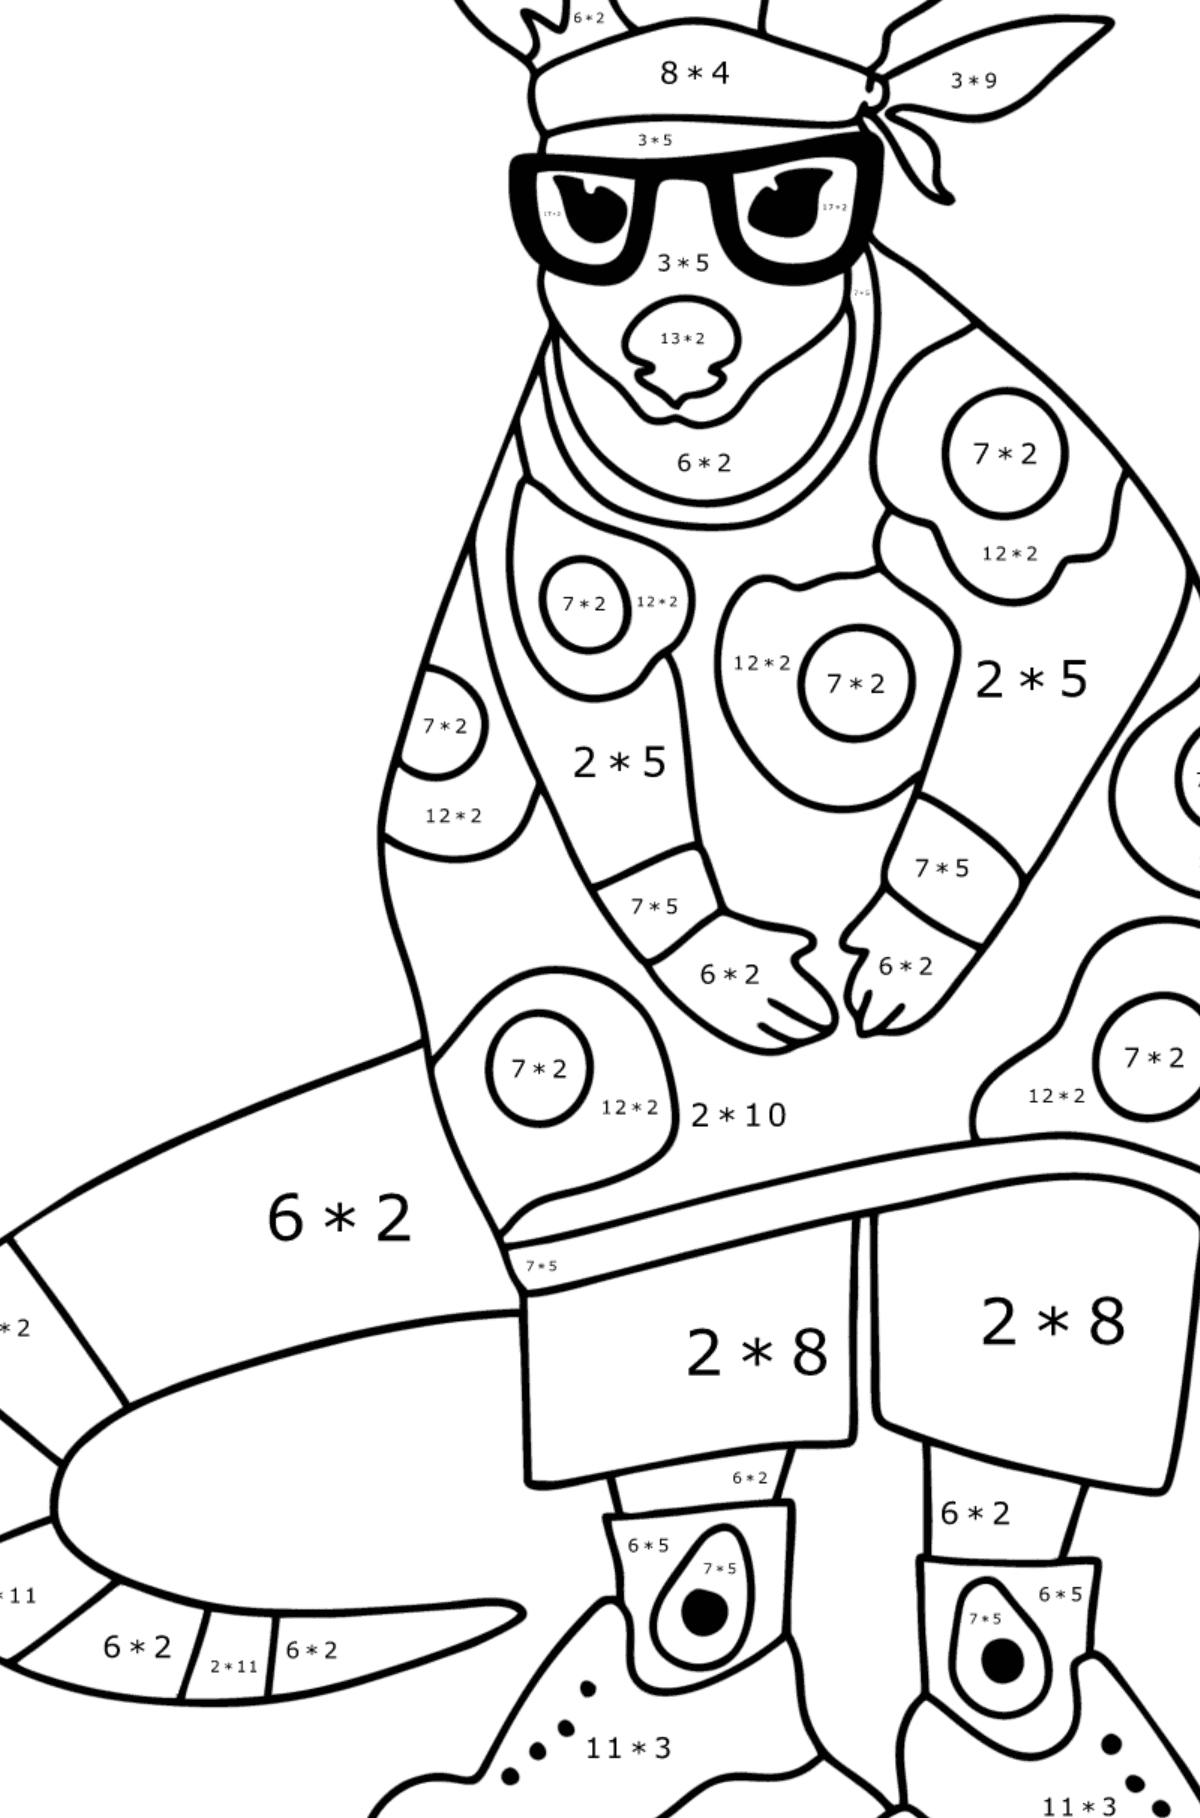 Cartoon Kangaroo coloring page - Math Coloring - Multiplication for Kids